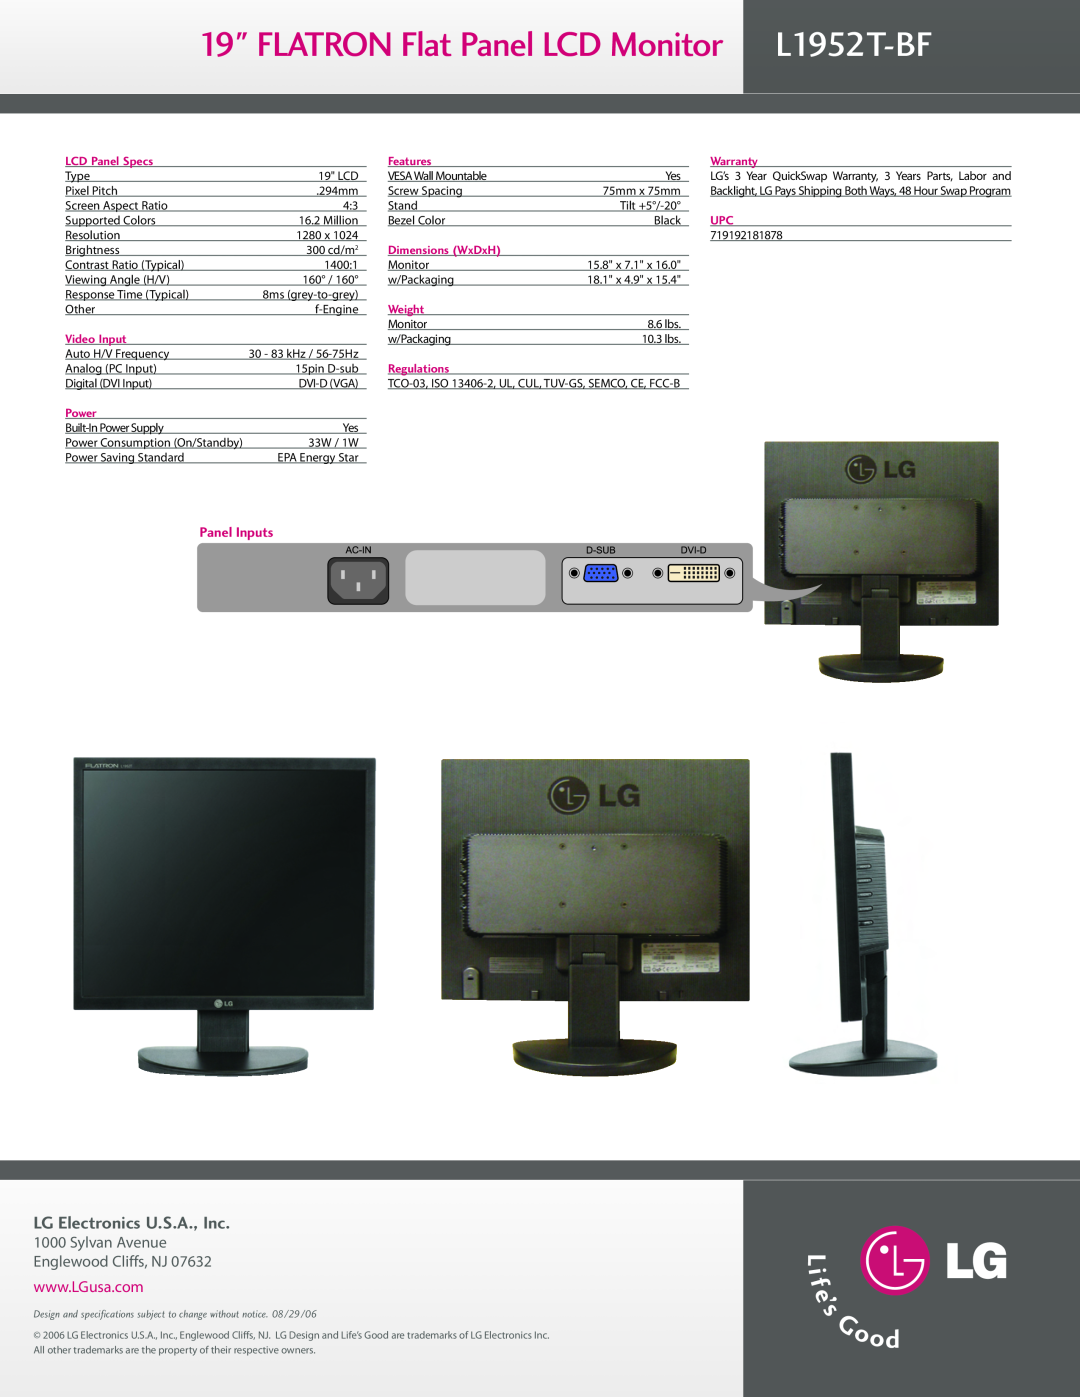 LG Electronics FLATRON Flat Panel LCD Monitor L1952T-BF, LG Electronics U.S.A., Inc, Panel Inputs, StandFeatures, Power 